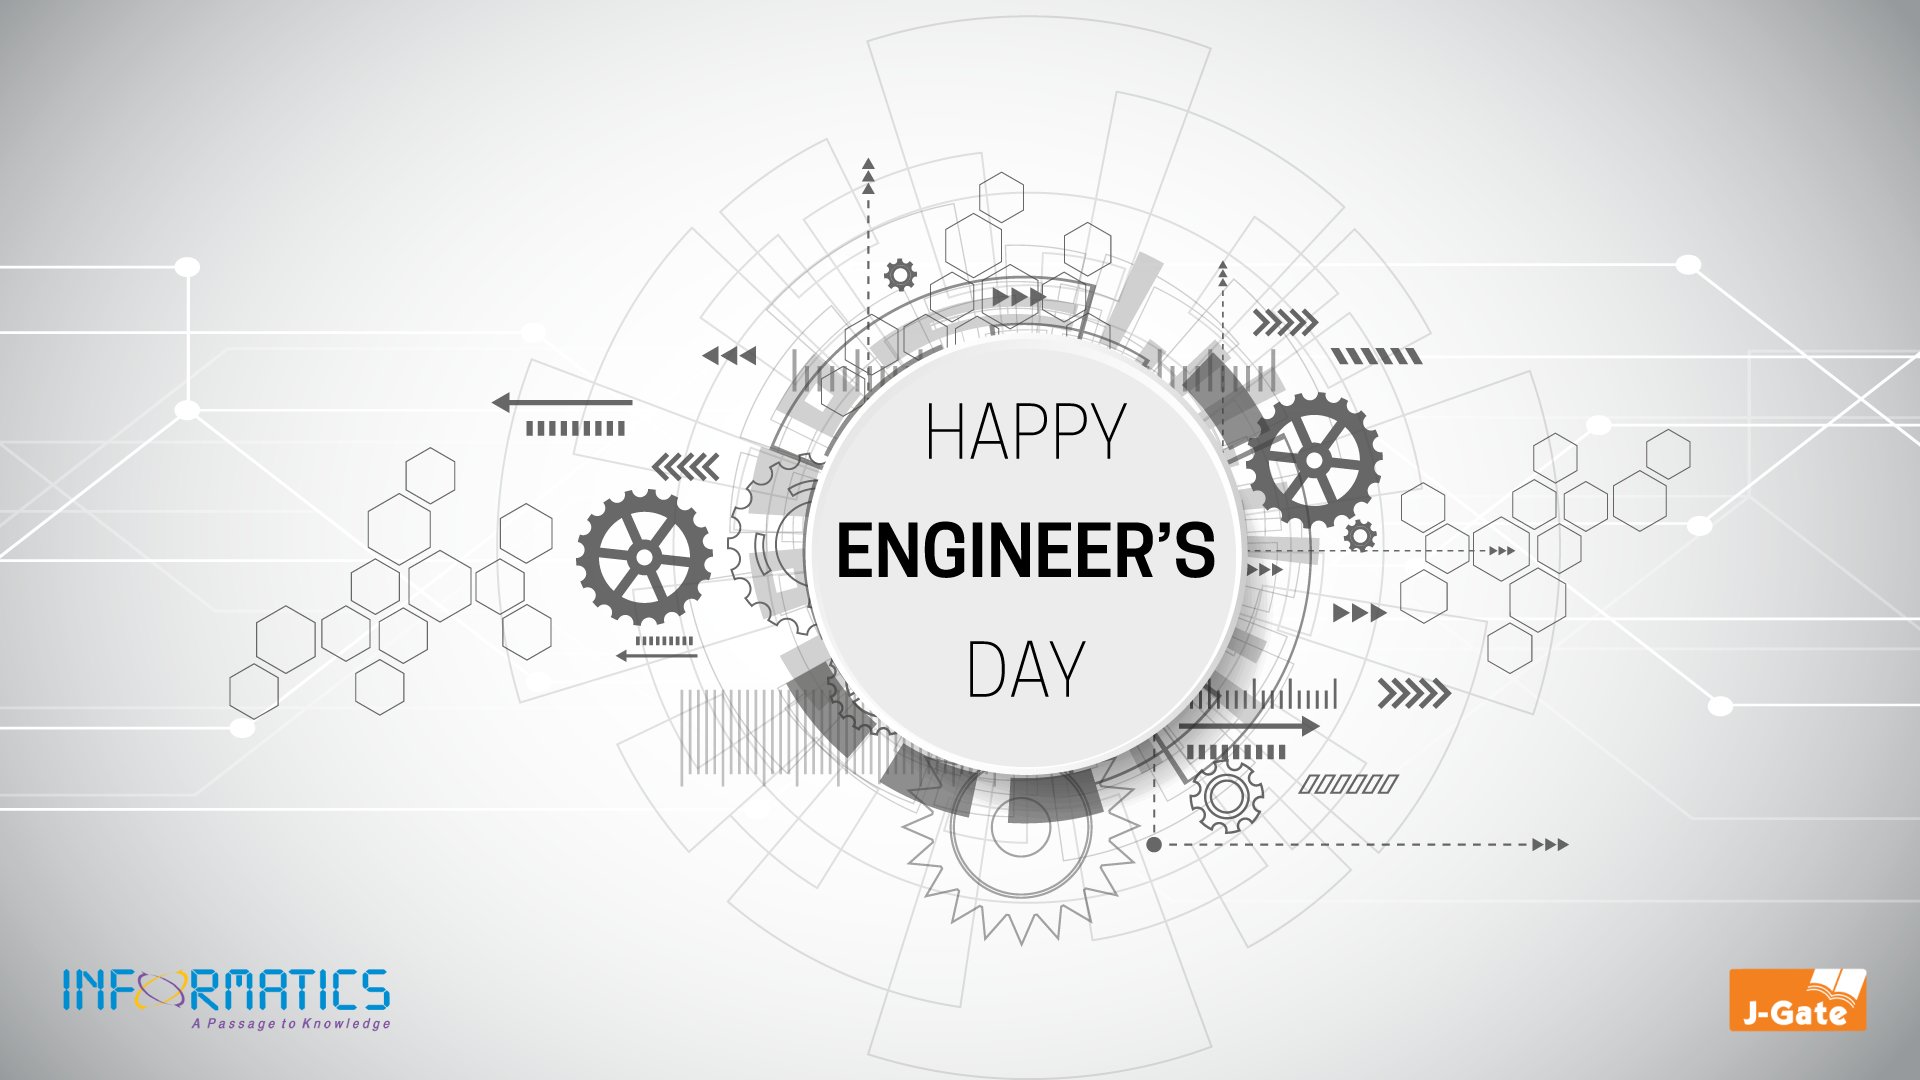 rdindiabooks #happyengineersday | Engineers day quotes, Engineers day,  Happy engineer's day